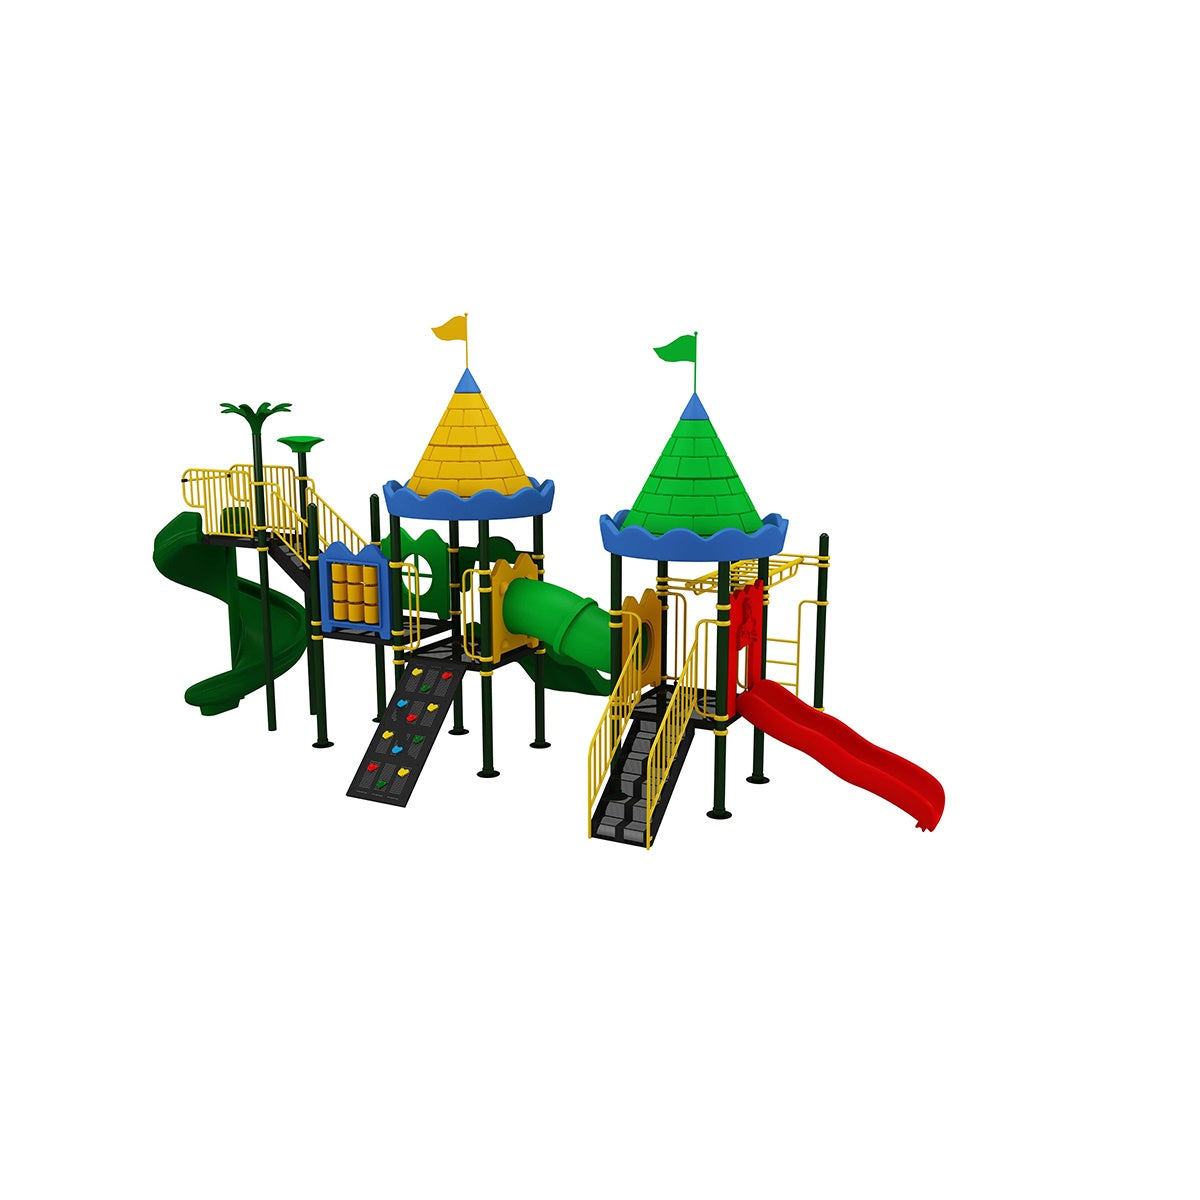 Cortege Play Ground Equipment | Outdoor Playground Provider | Creative Play Equipment | Kids Outdoor Playground |